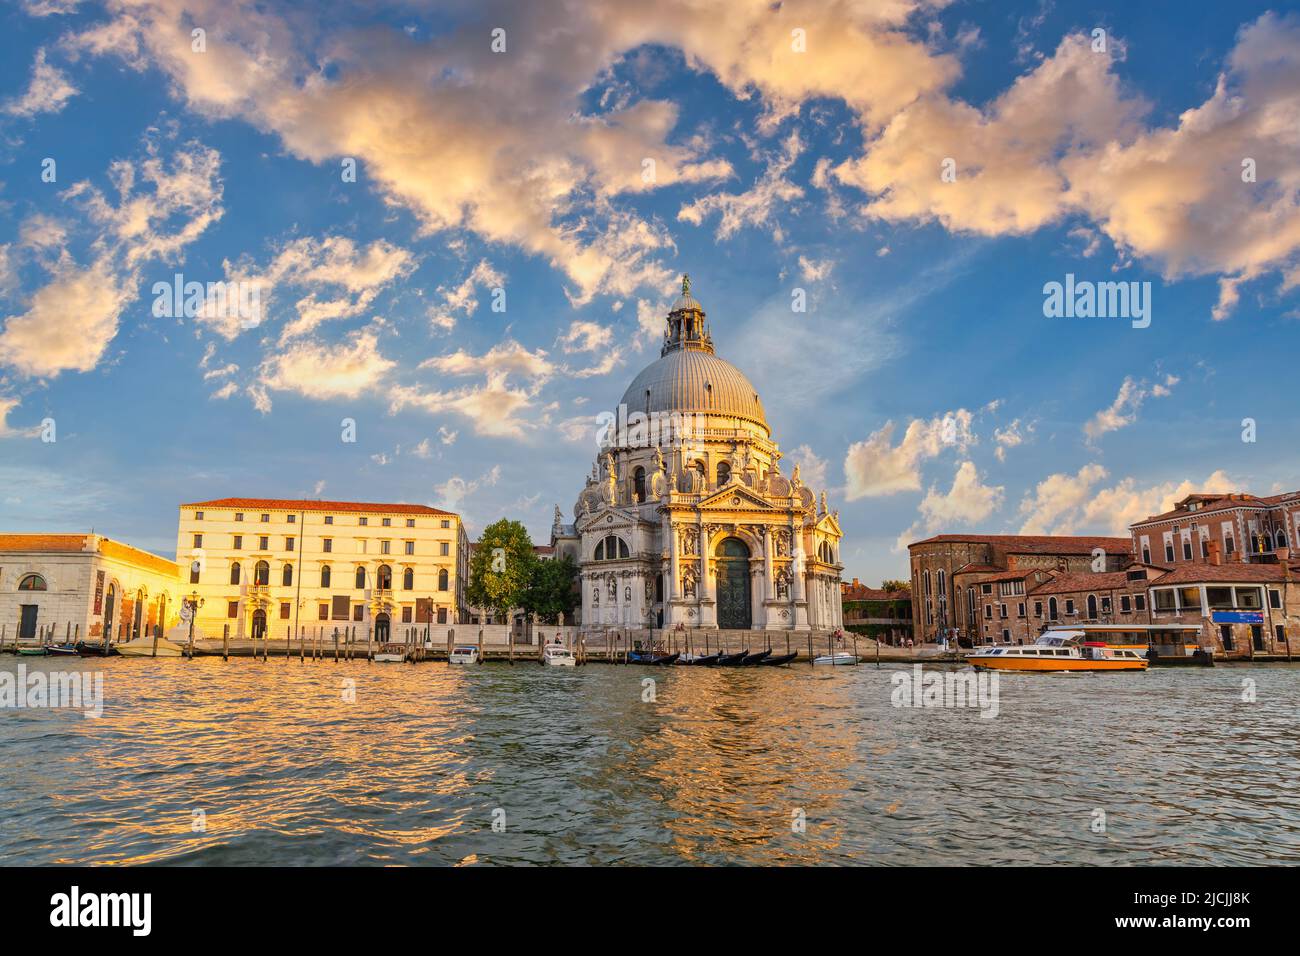 Venice Italy, sunset city skyline at Venice Grand Canal and Basilica di Santa Maria della Salute Stock Photo